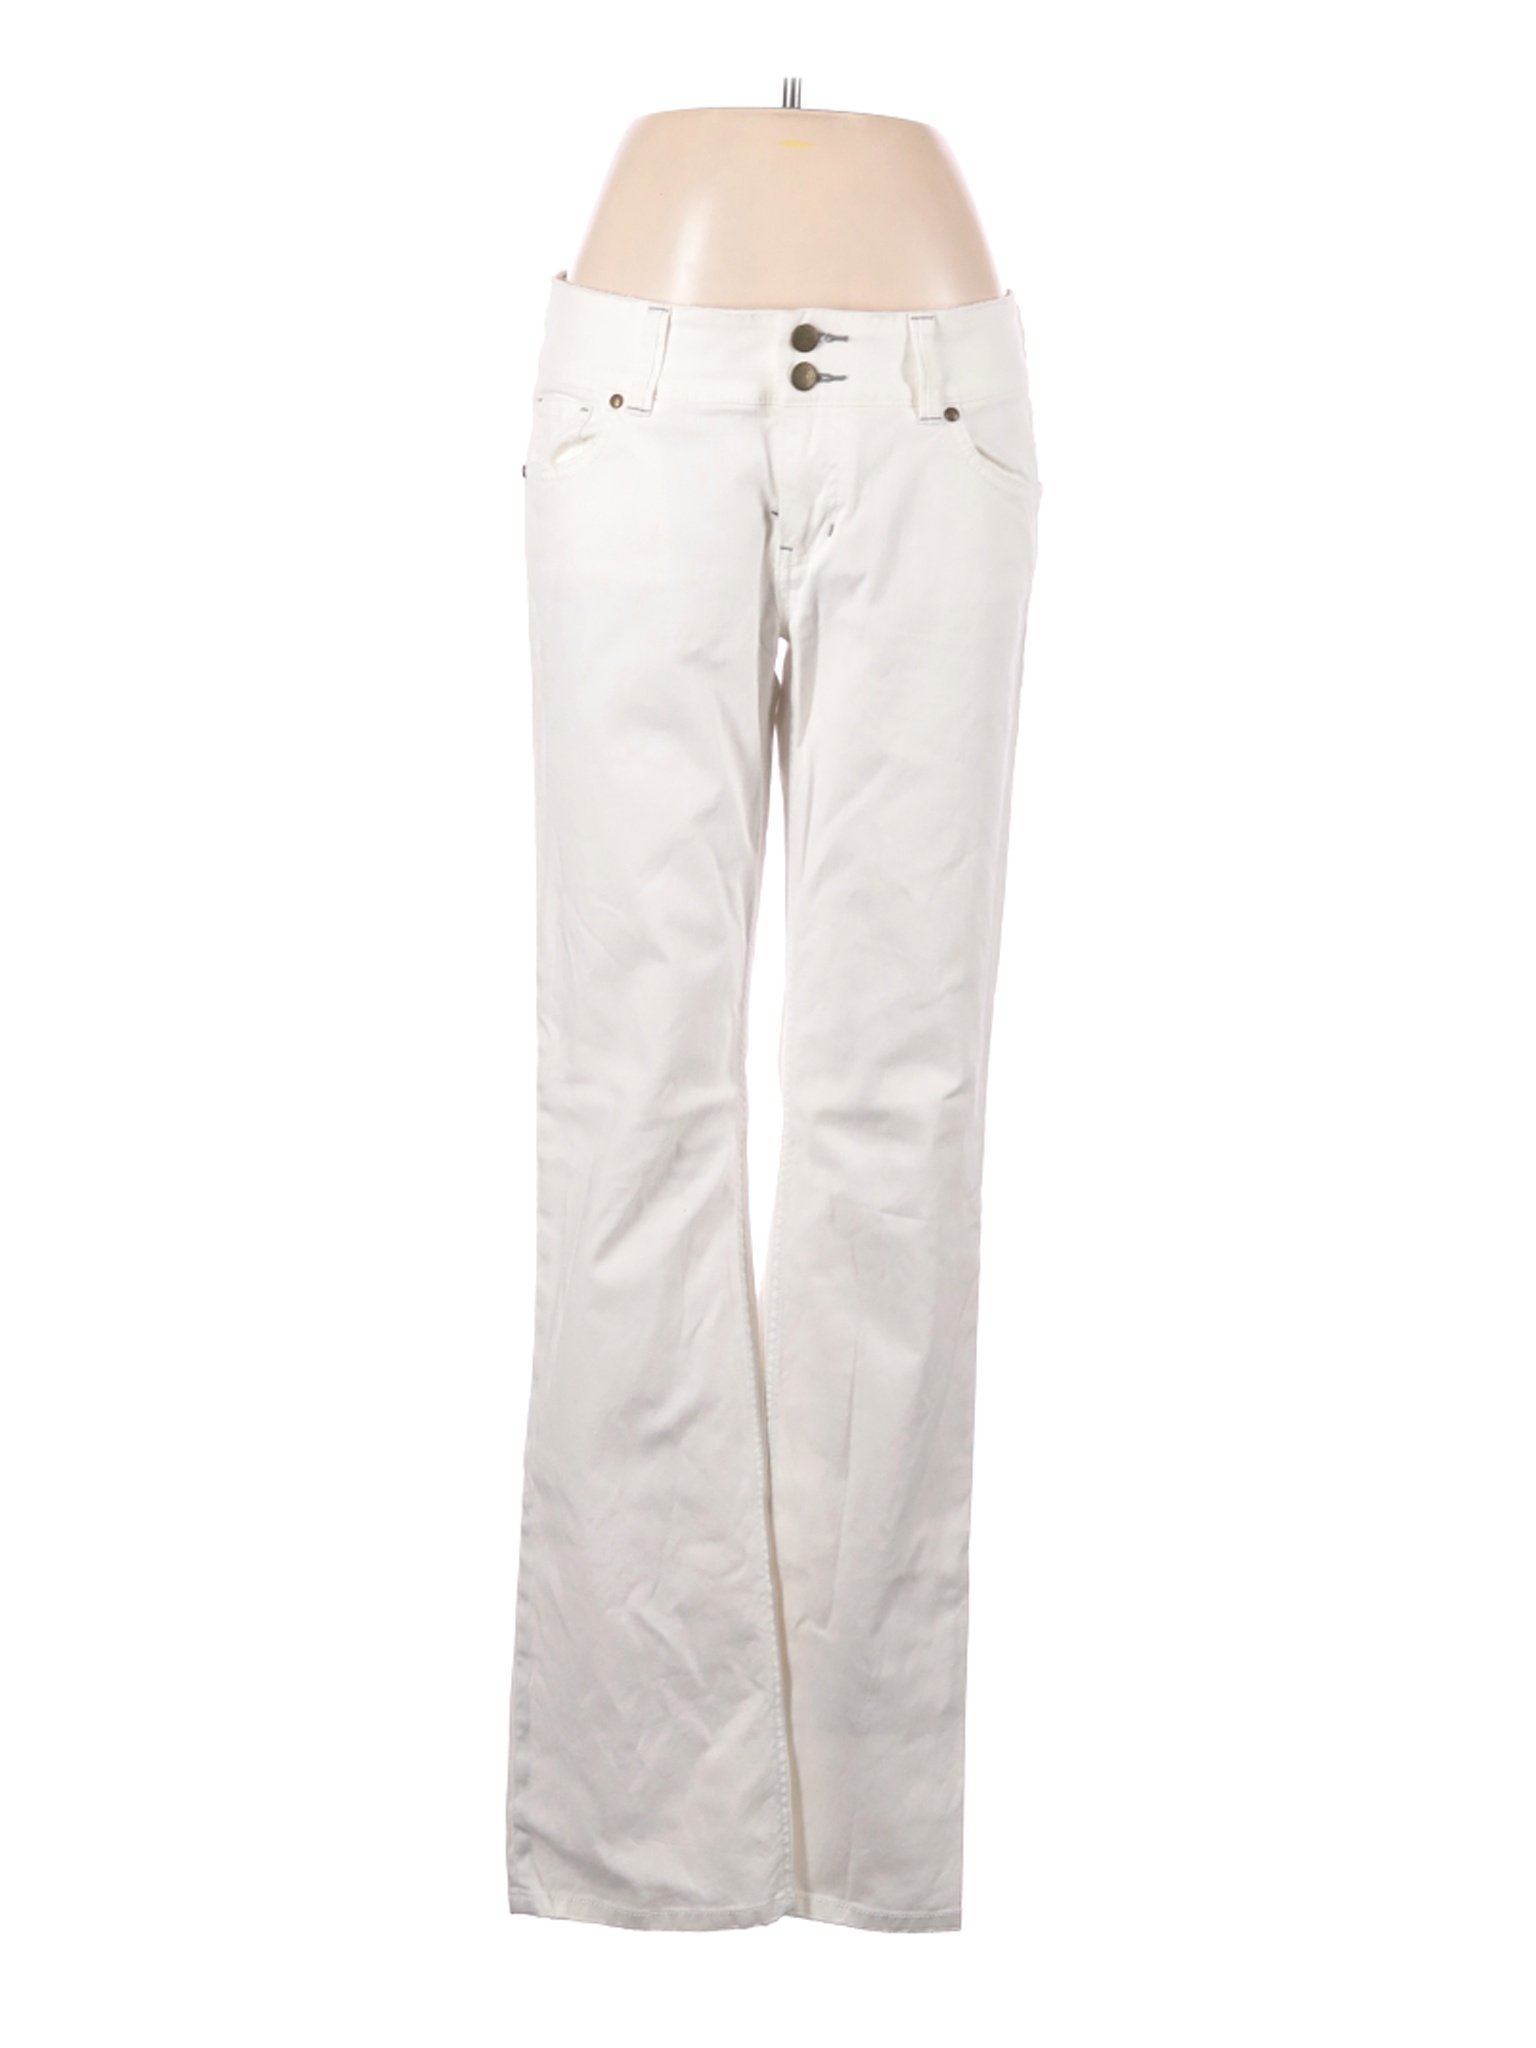 CAbi Women White Jeans 8 | eBay